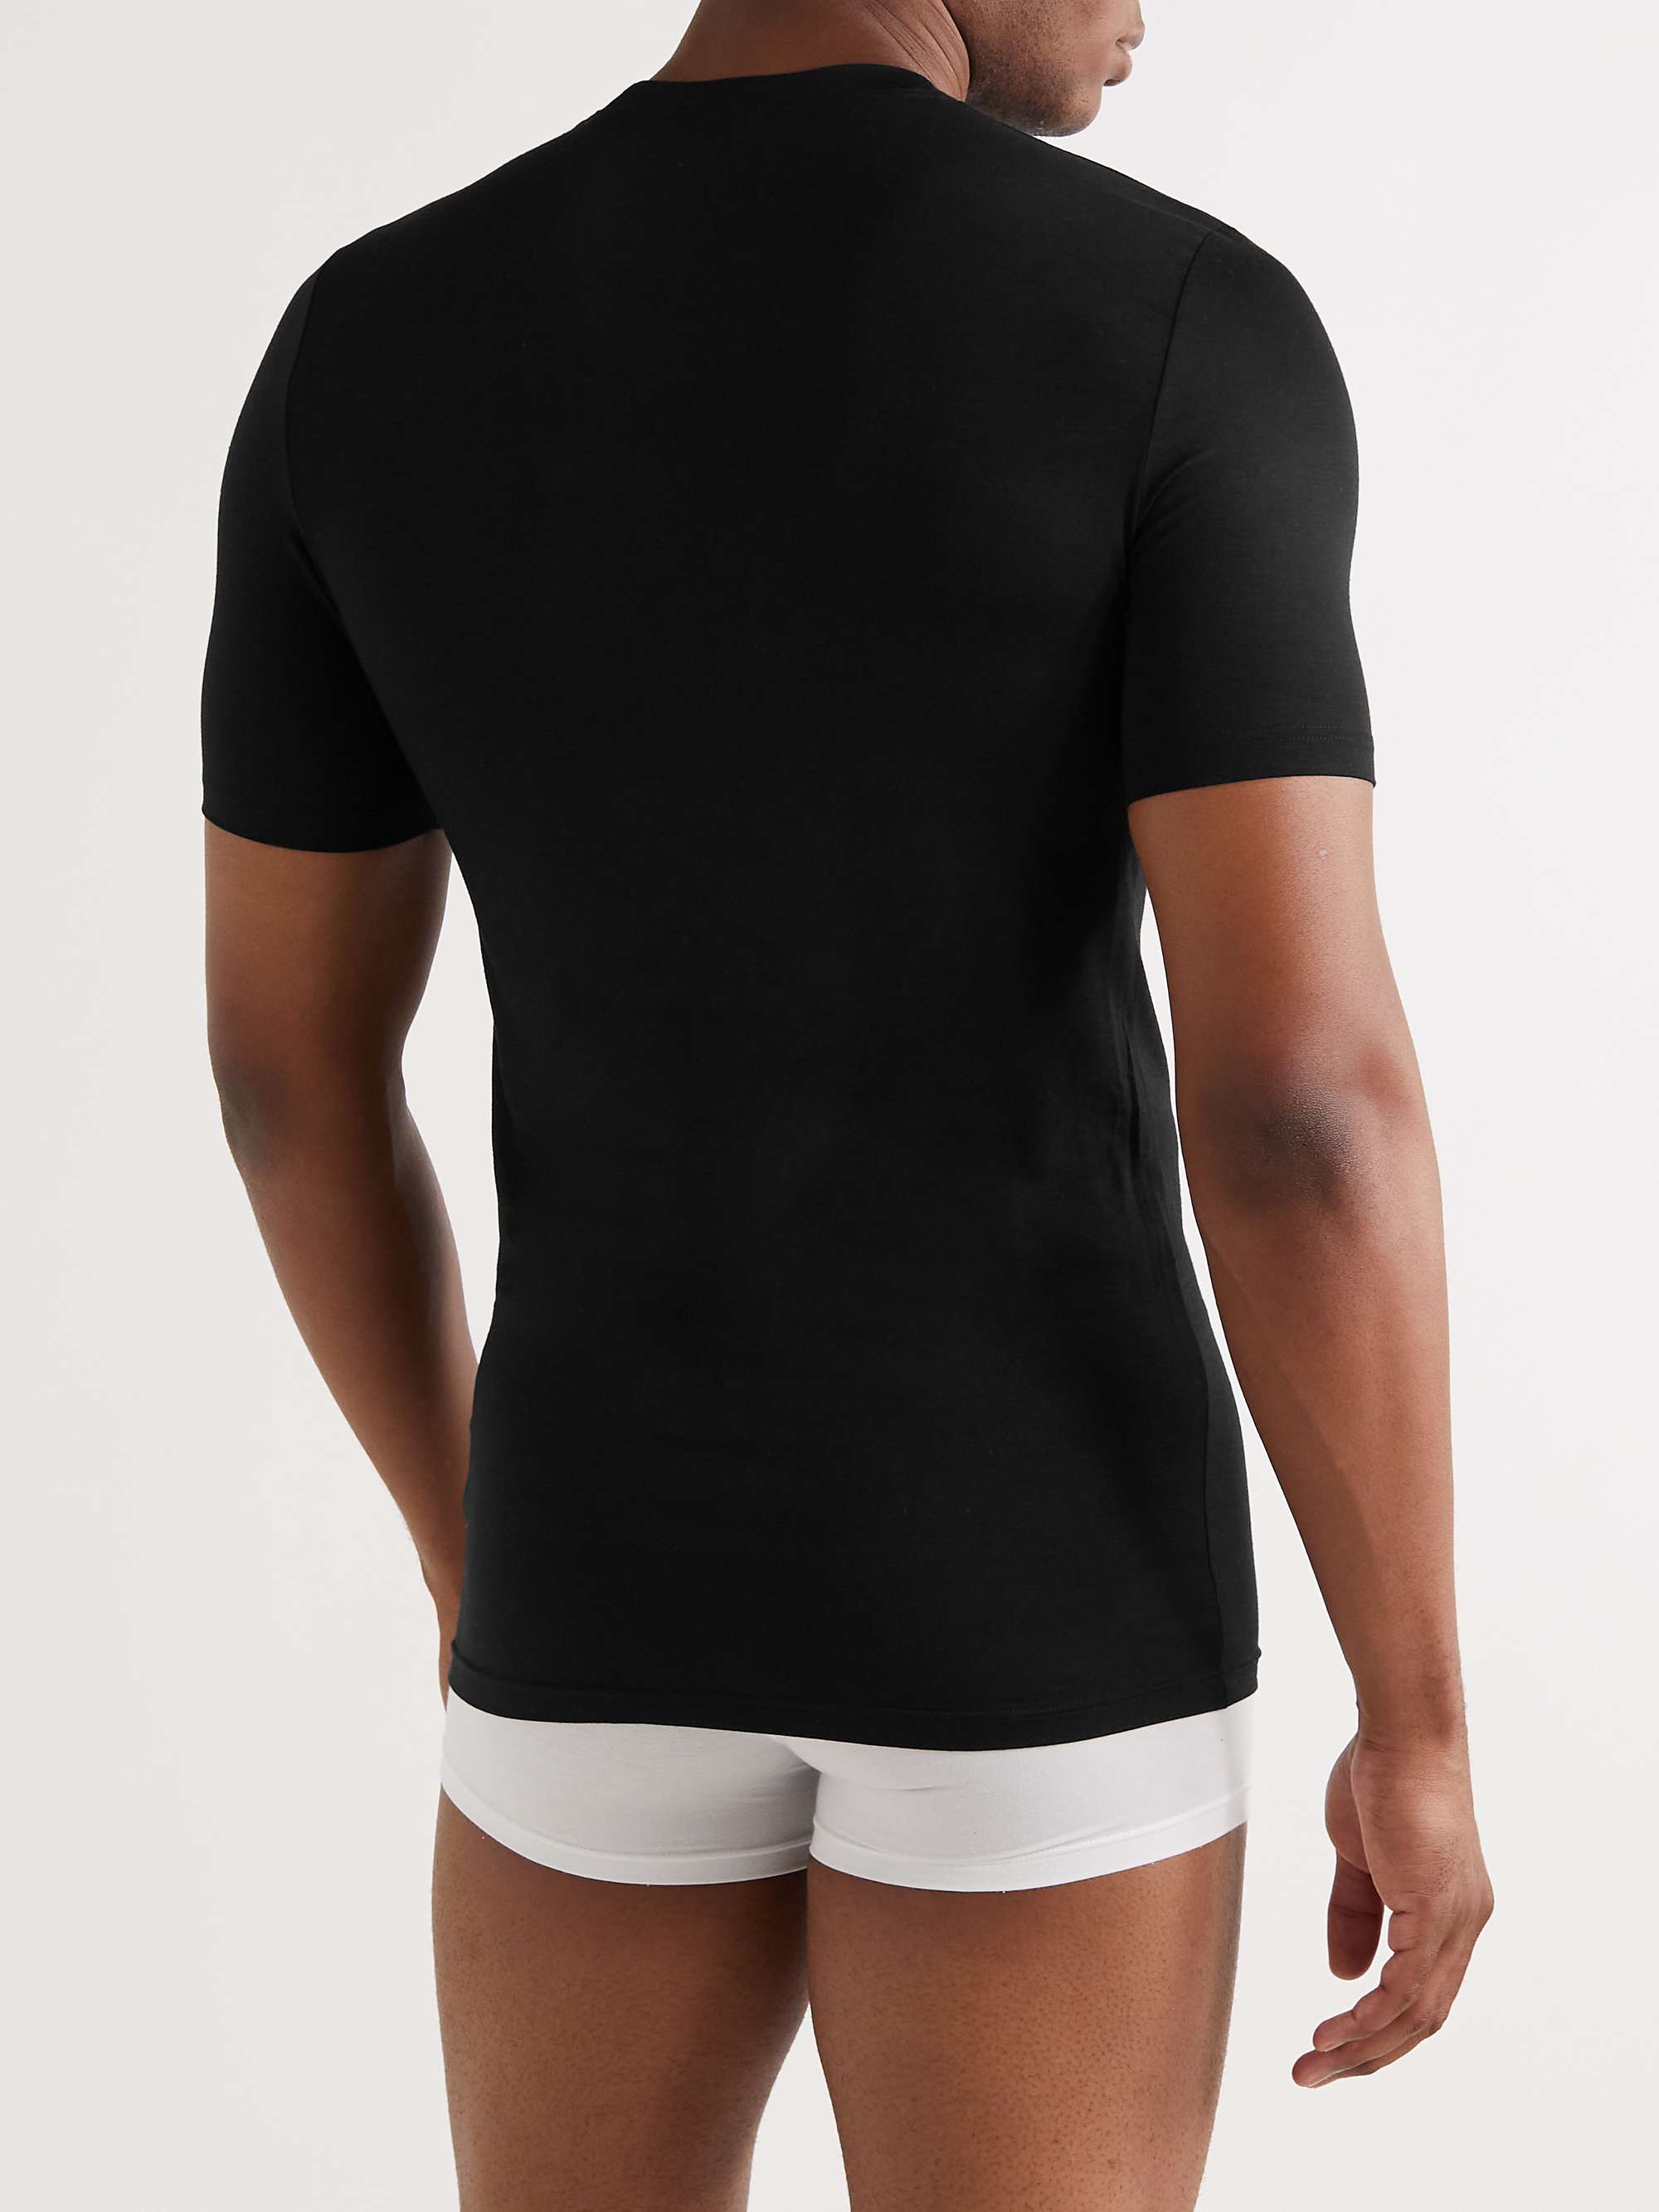 ZIMMERLI Pureness T-Shirt aus Stretch-MicroModal®